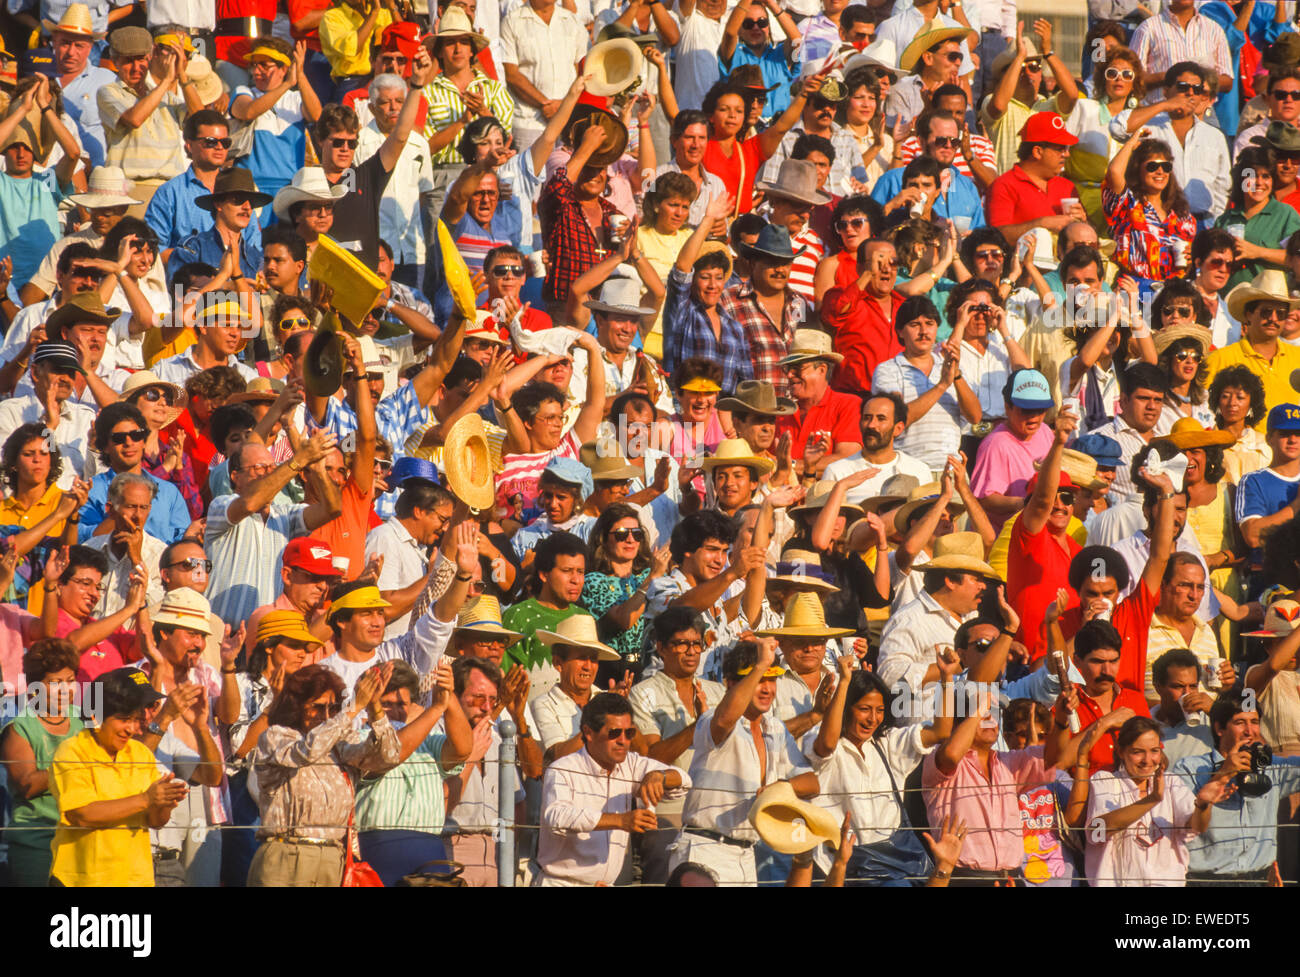 CARACAS, VENEZUELA - Crowd of spectators at bullfight in arena. 1988 Stock Photo